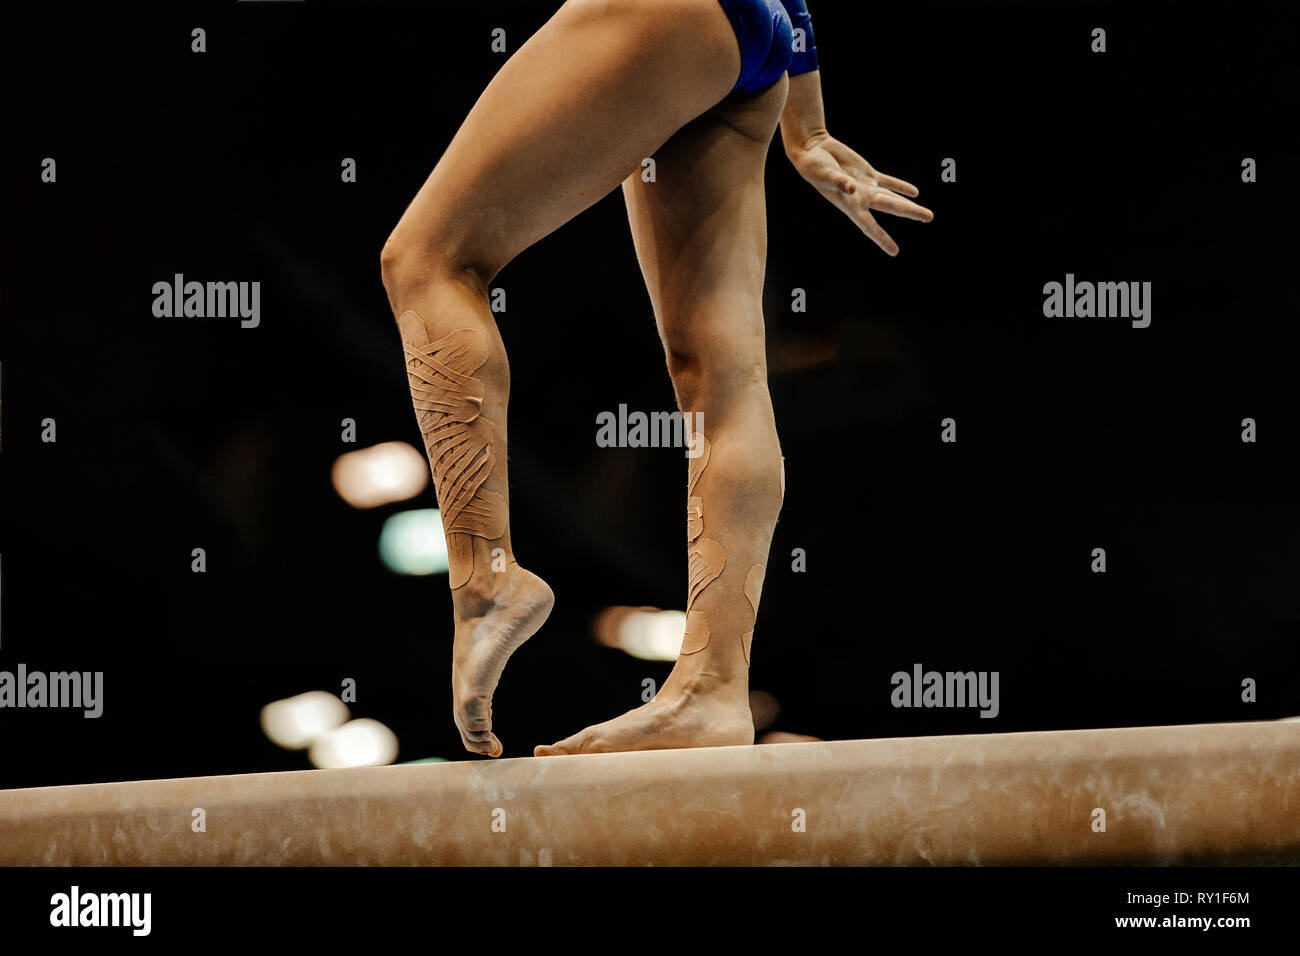 legs women gymnasts on balance beam on black background Stock Photo